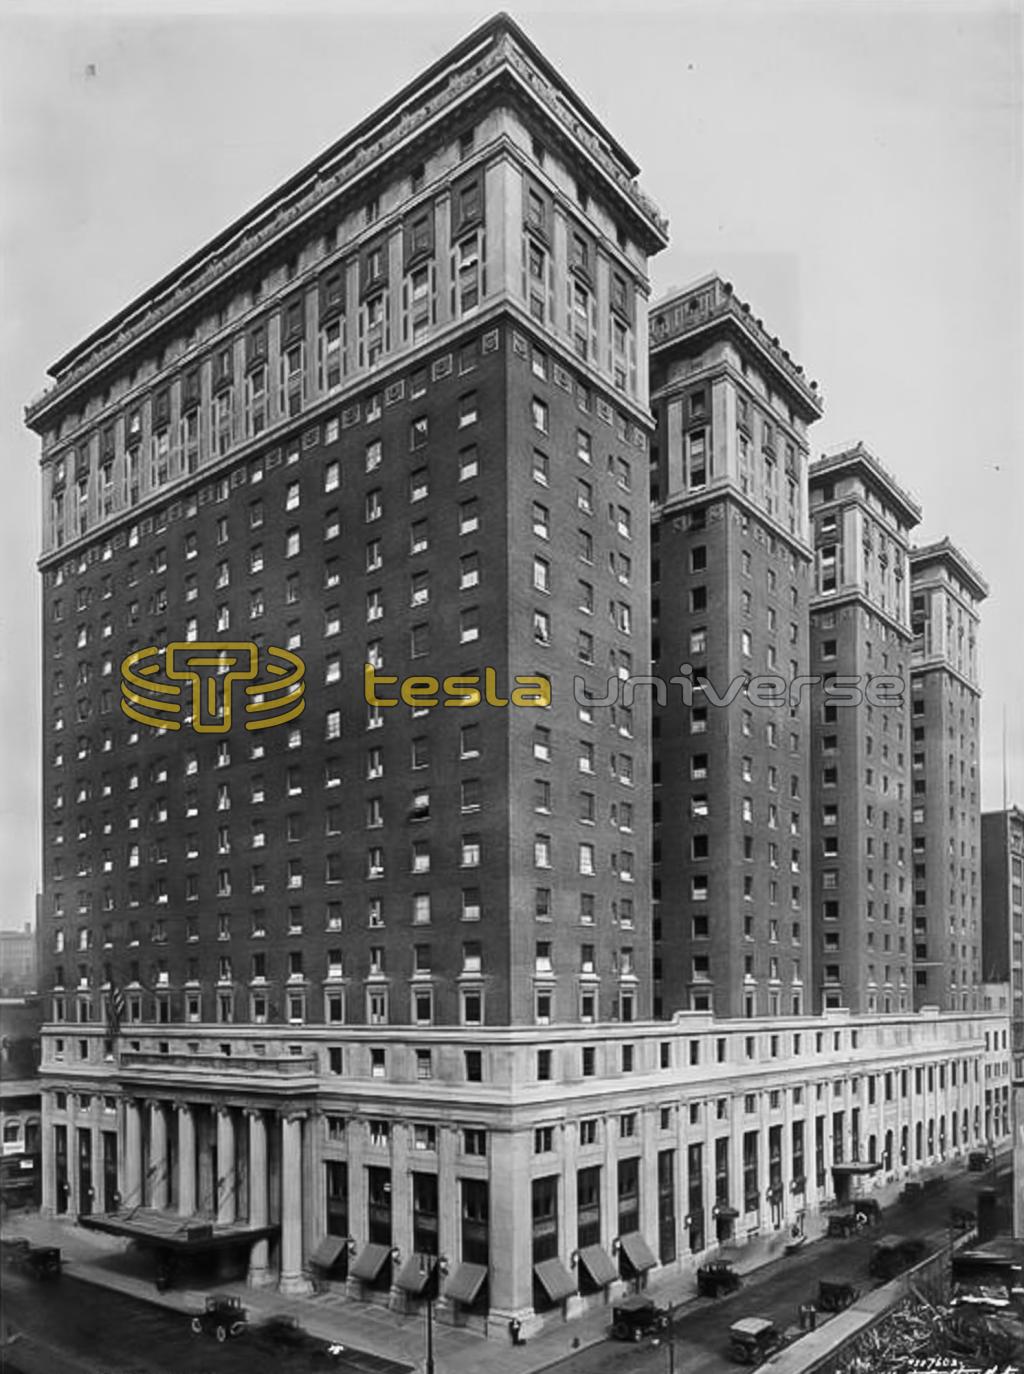 The Hotel Pennsylvania, New York City where Tesla lived briefly